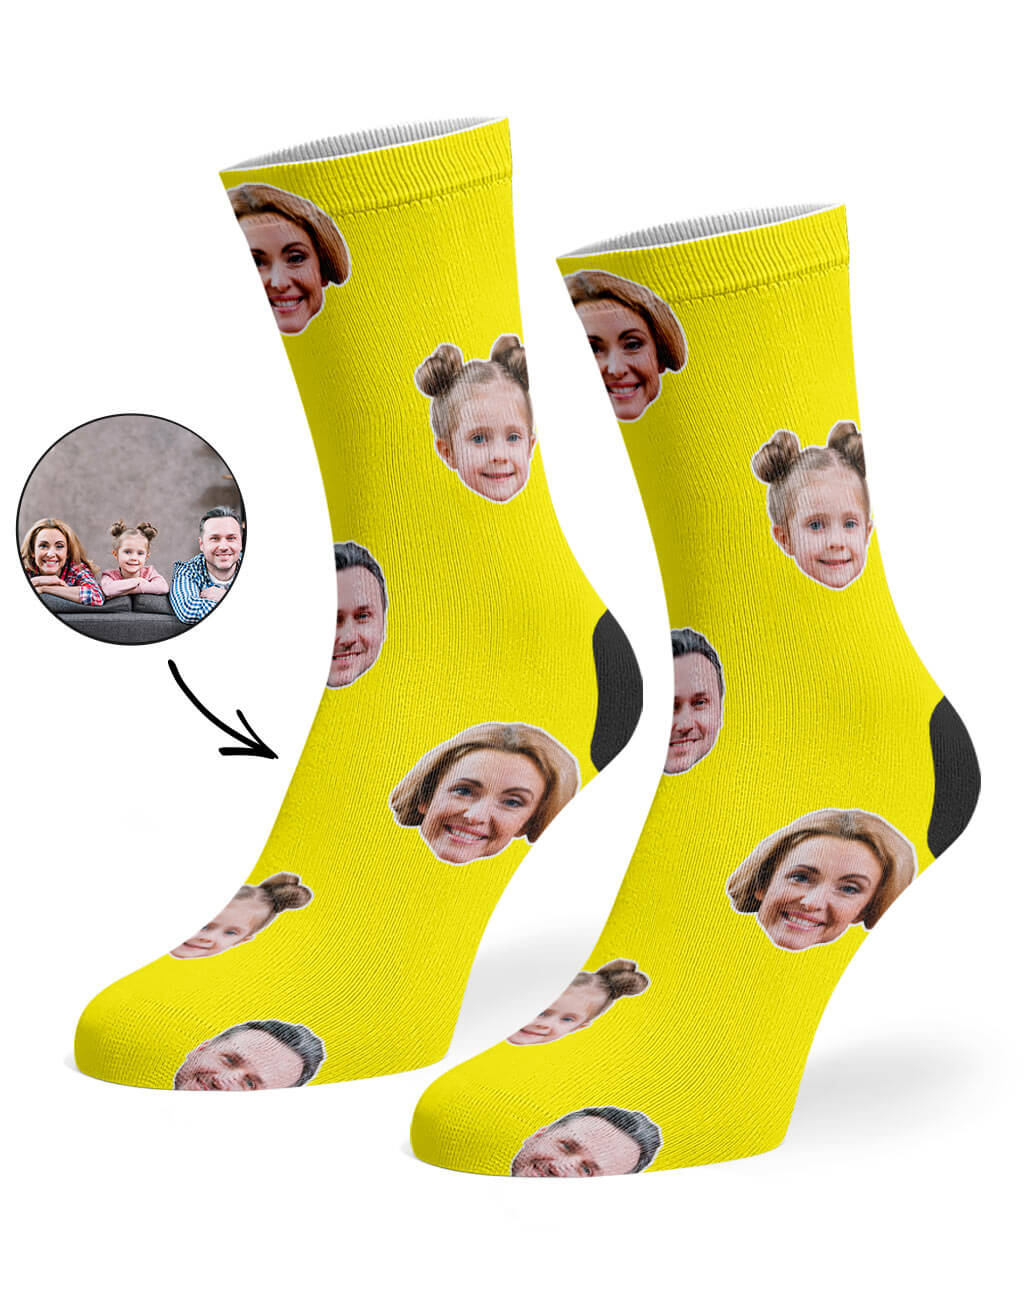 family custom socks with your photo on